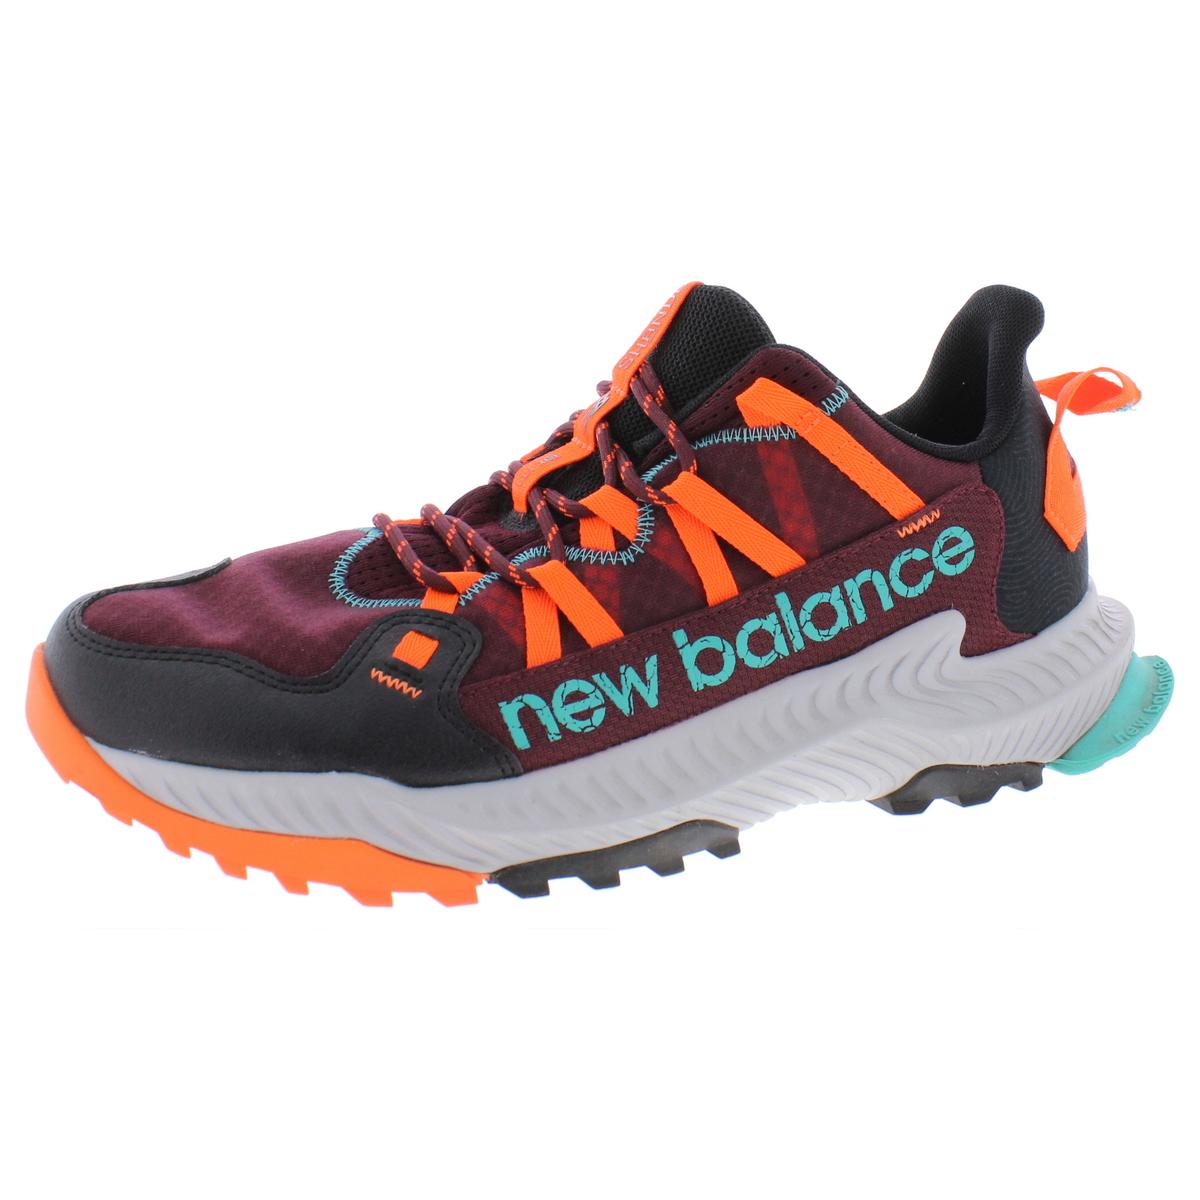 New Balance Mens Shando Red Running Shoes Sneakers 11.5 Medium (D) BHFO ...